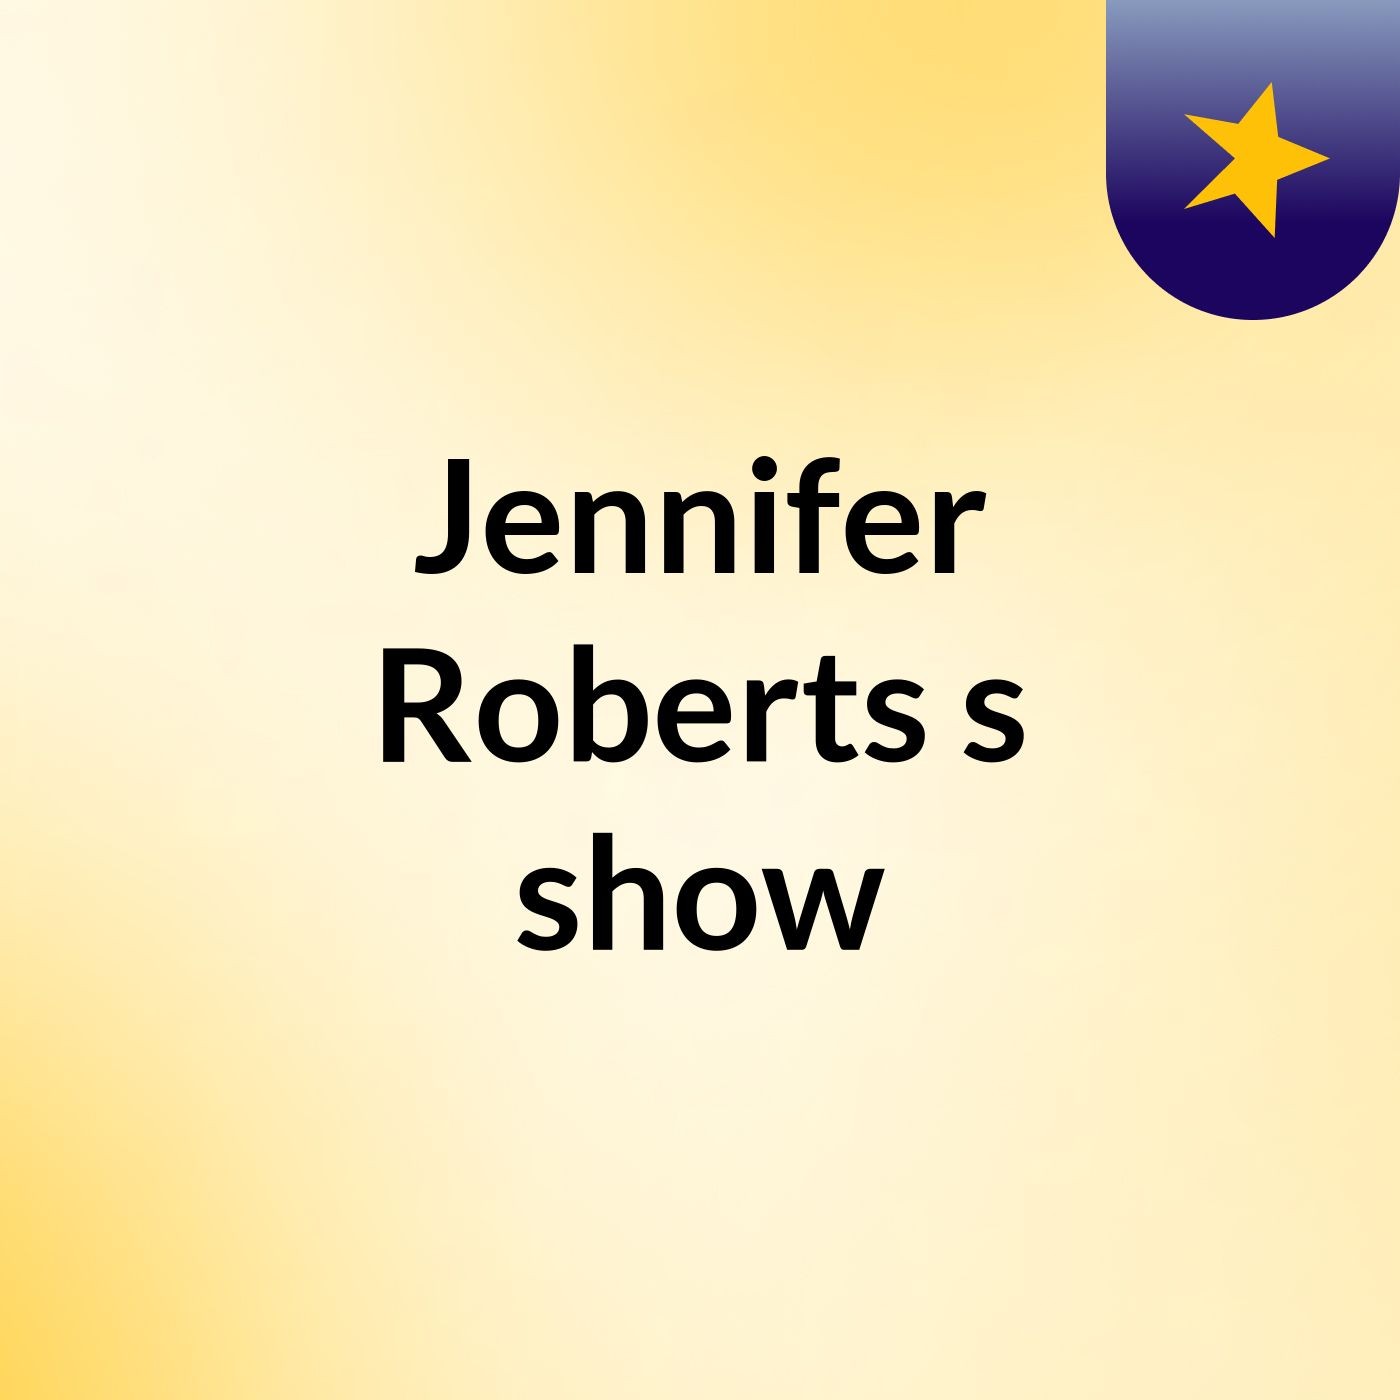 Jennifer Roberts's show